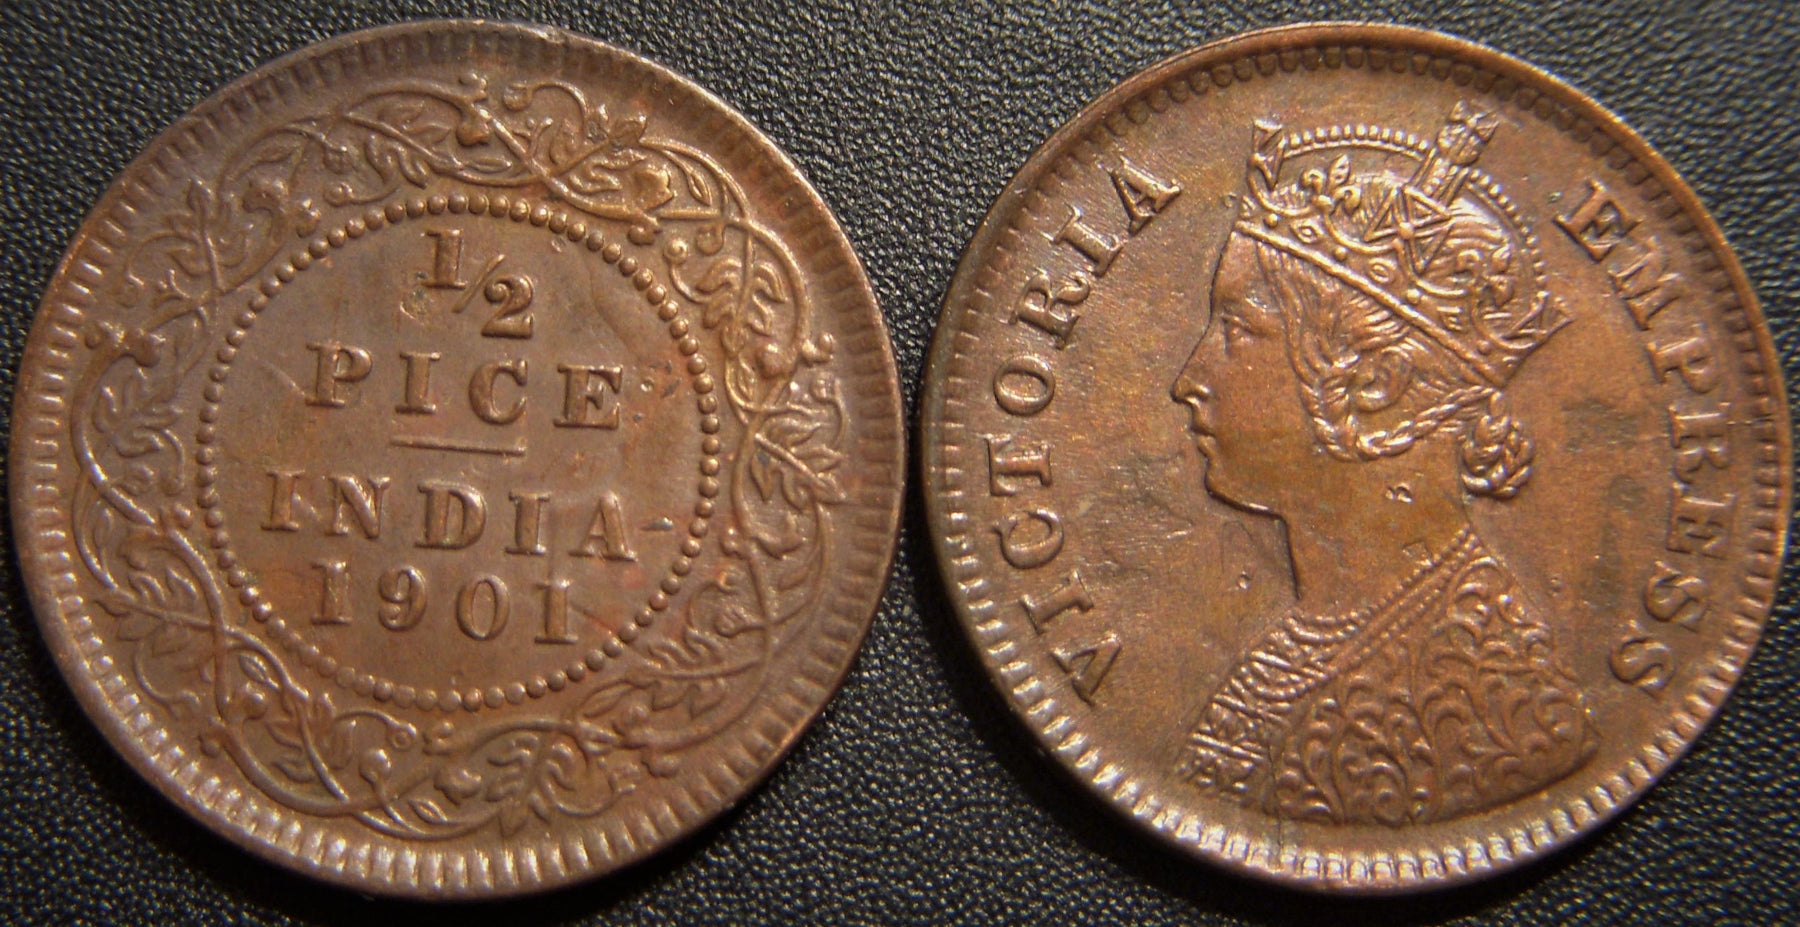 1901 1/2 Pice - India